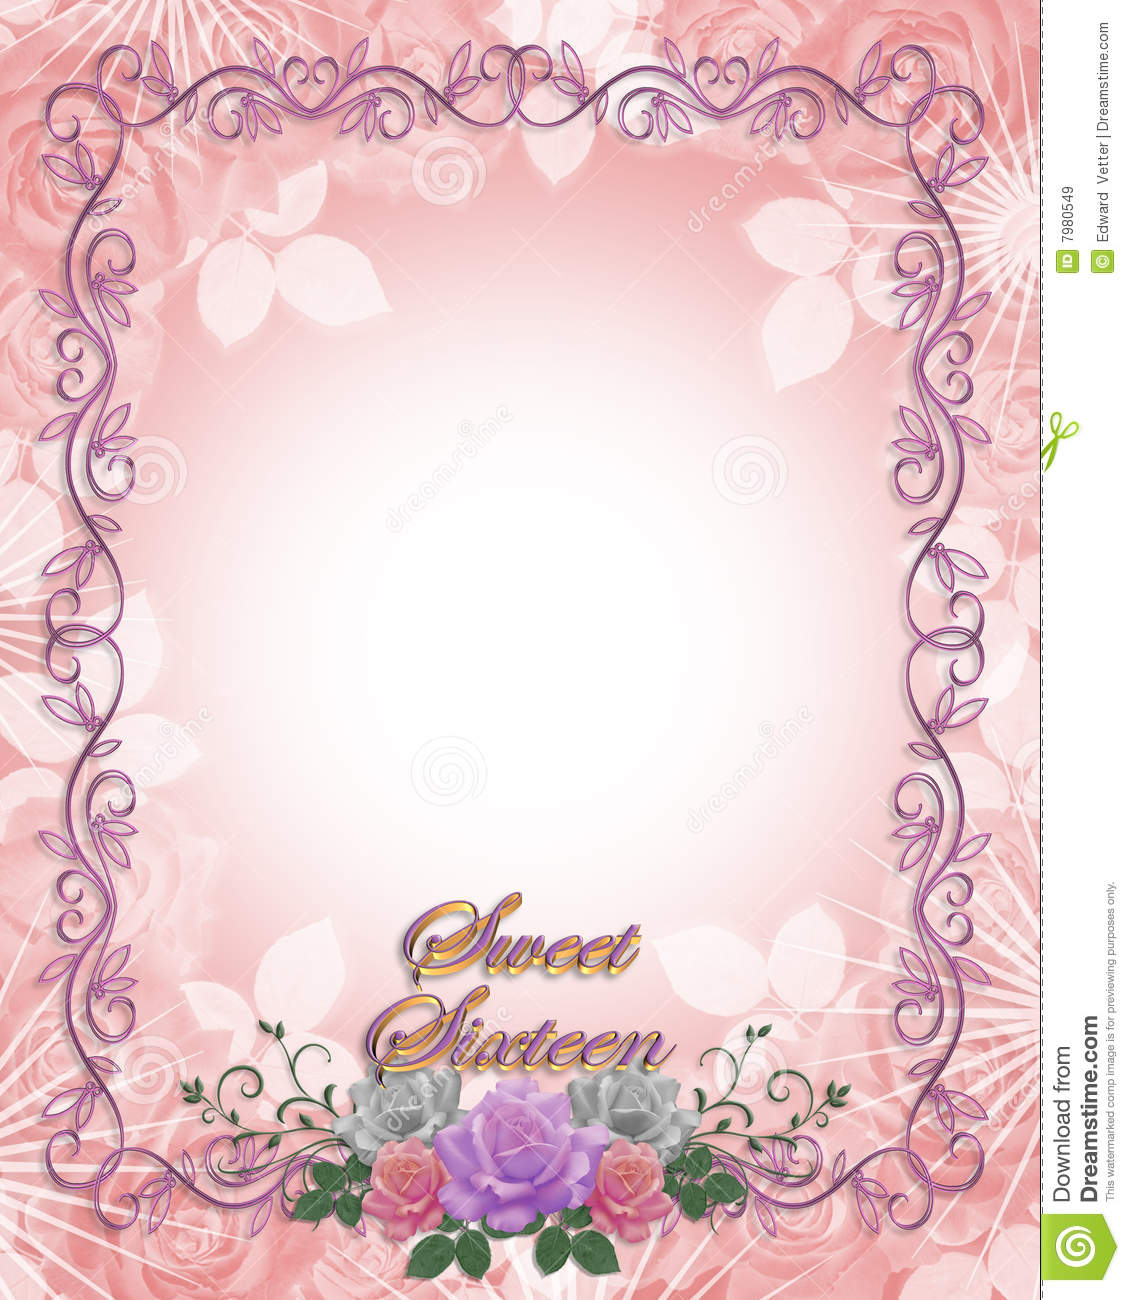 Sweet 16 Birthday Invitation Roses Royalty Free Stock Images   Image    